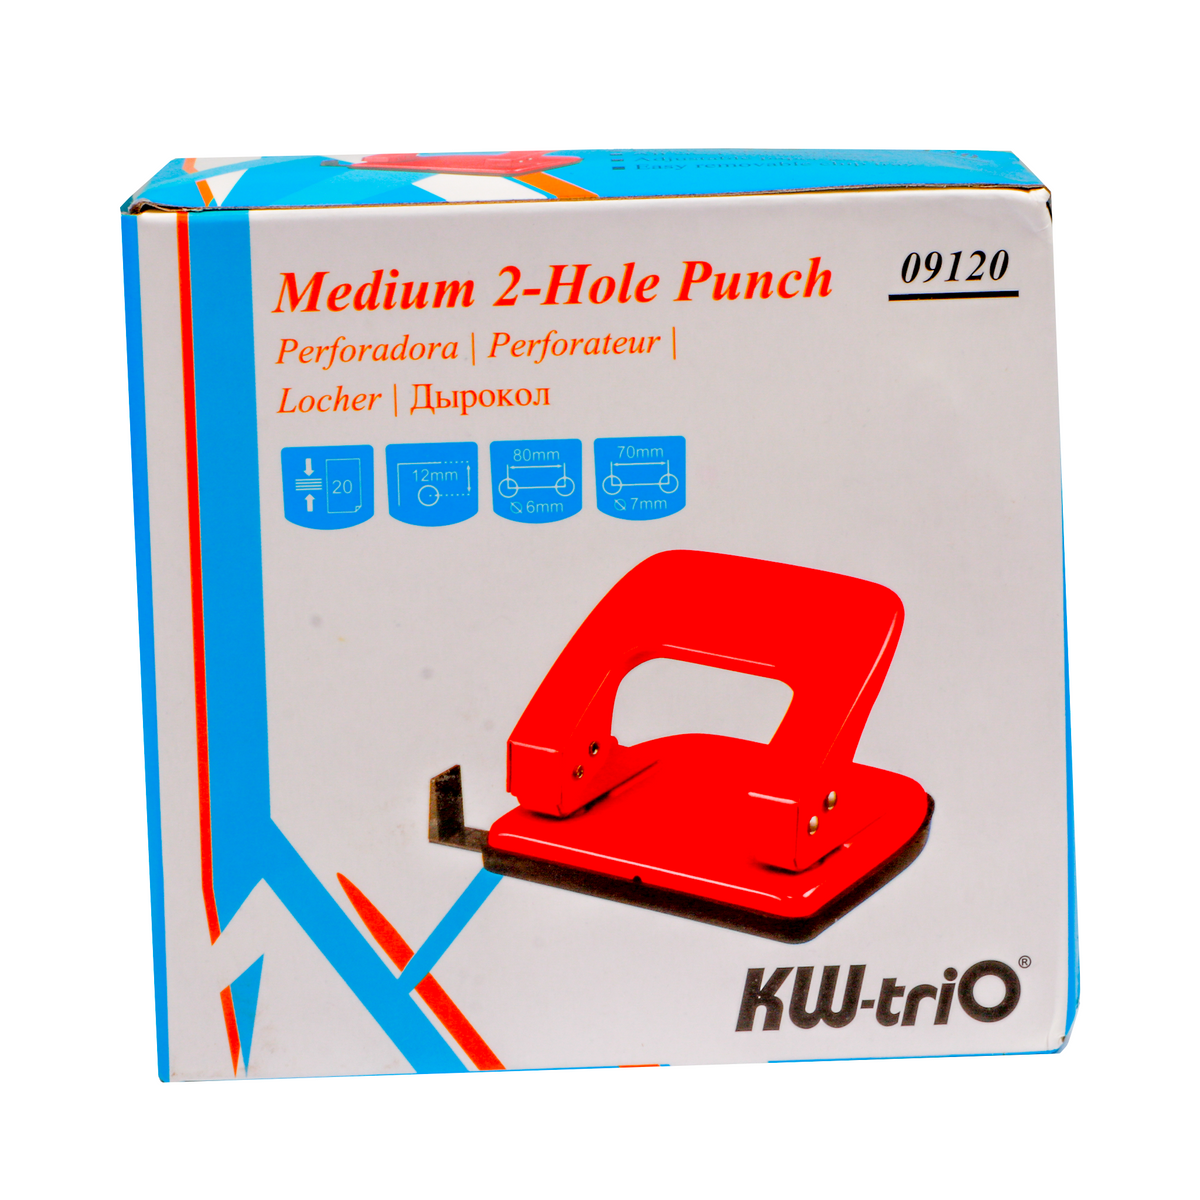 Fis Medium 2-Hole Punch 9172